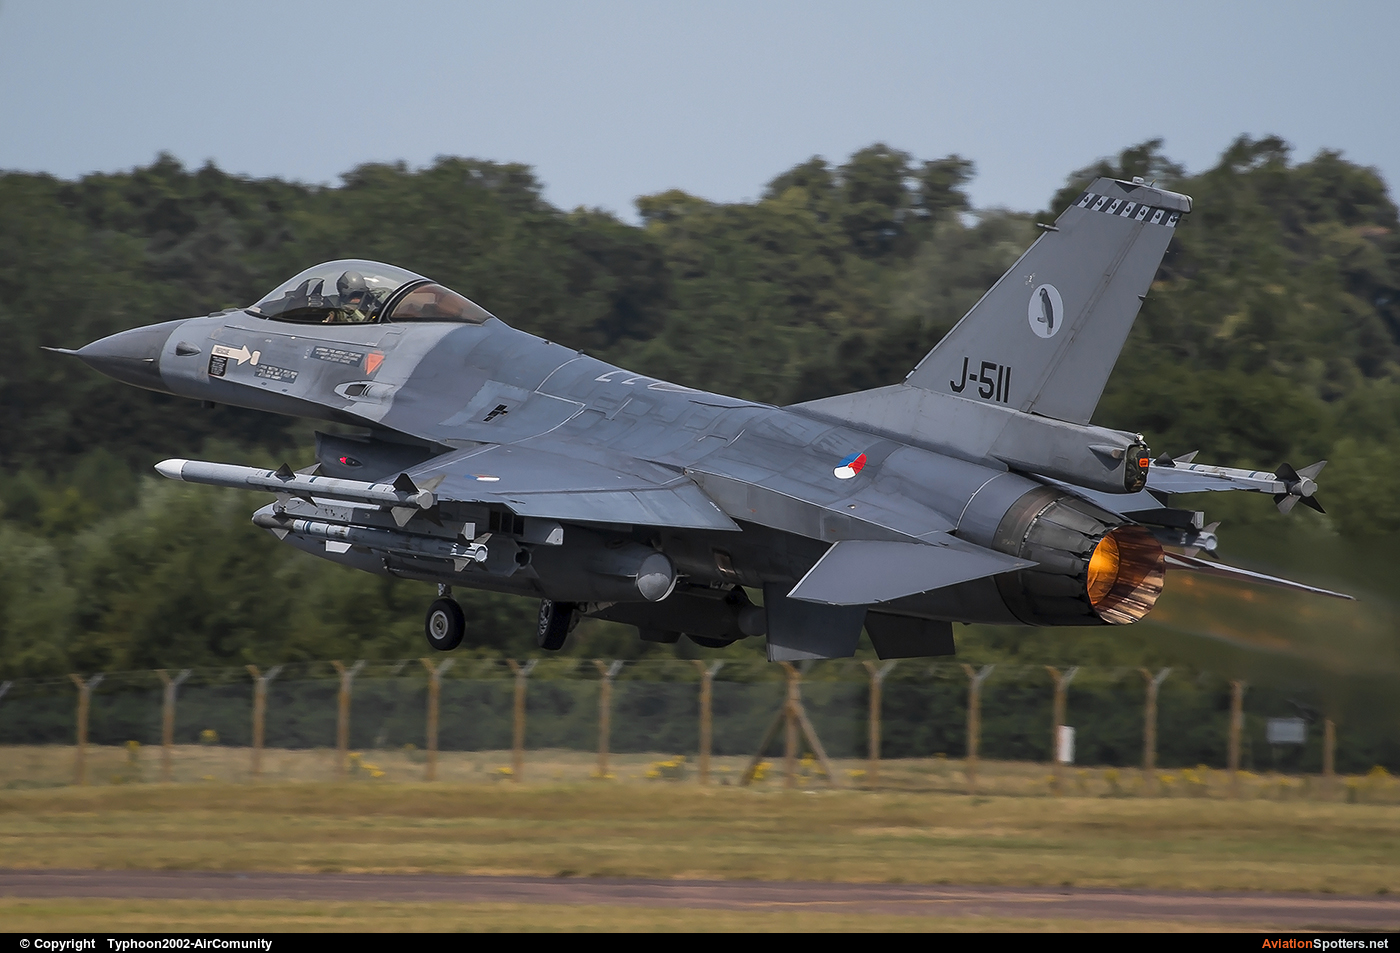 Netherlands - Air Force  -  F-16AM Fighting Falcon  (J-511) By Typhoon2002-AirComunity (AirComunity)